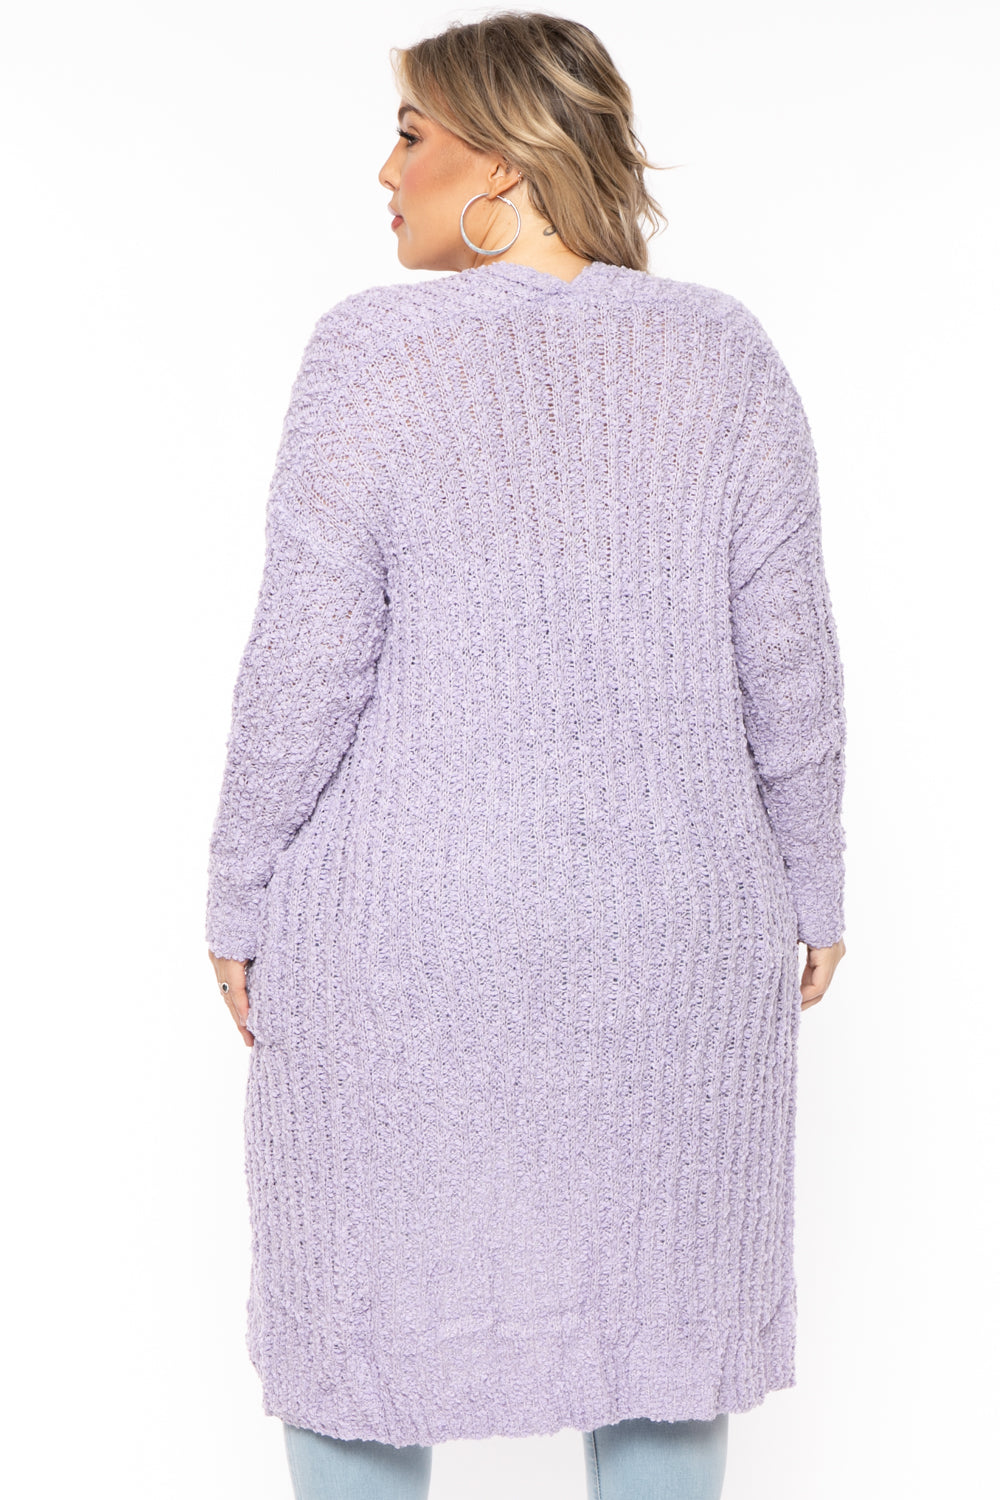 Lavender Purple Cableknit Sweater Leggings